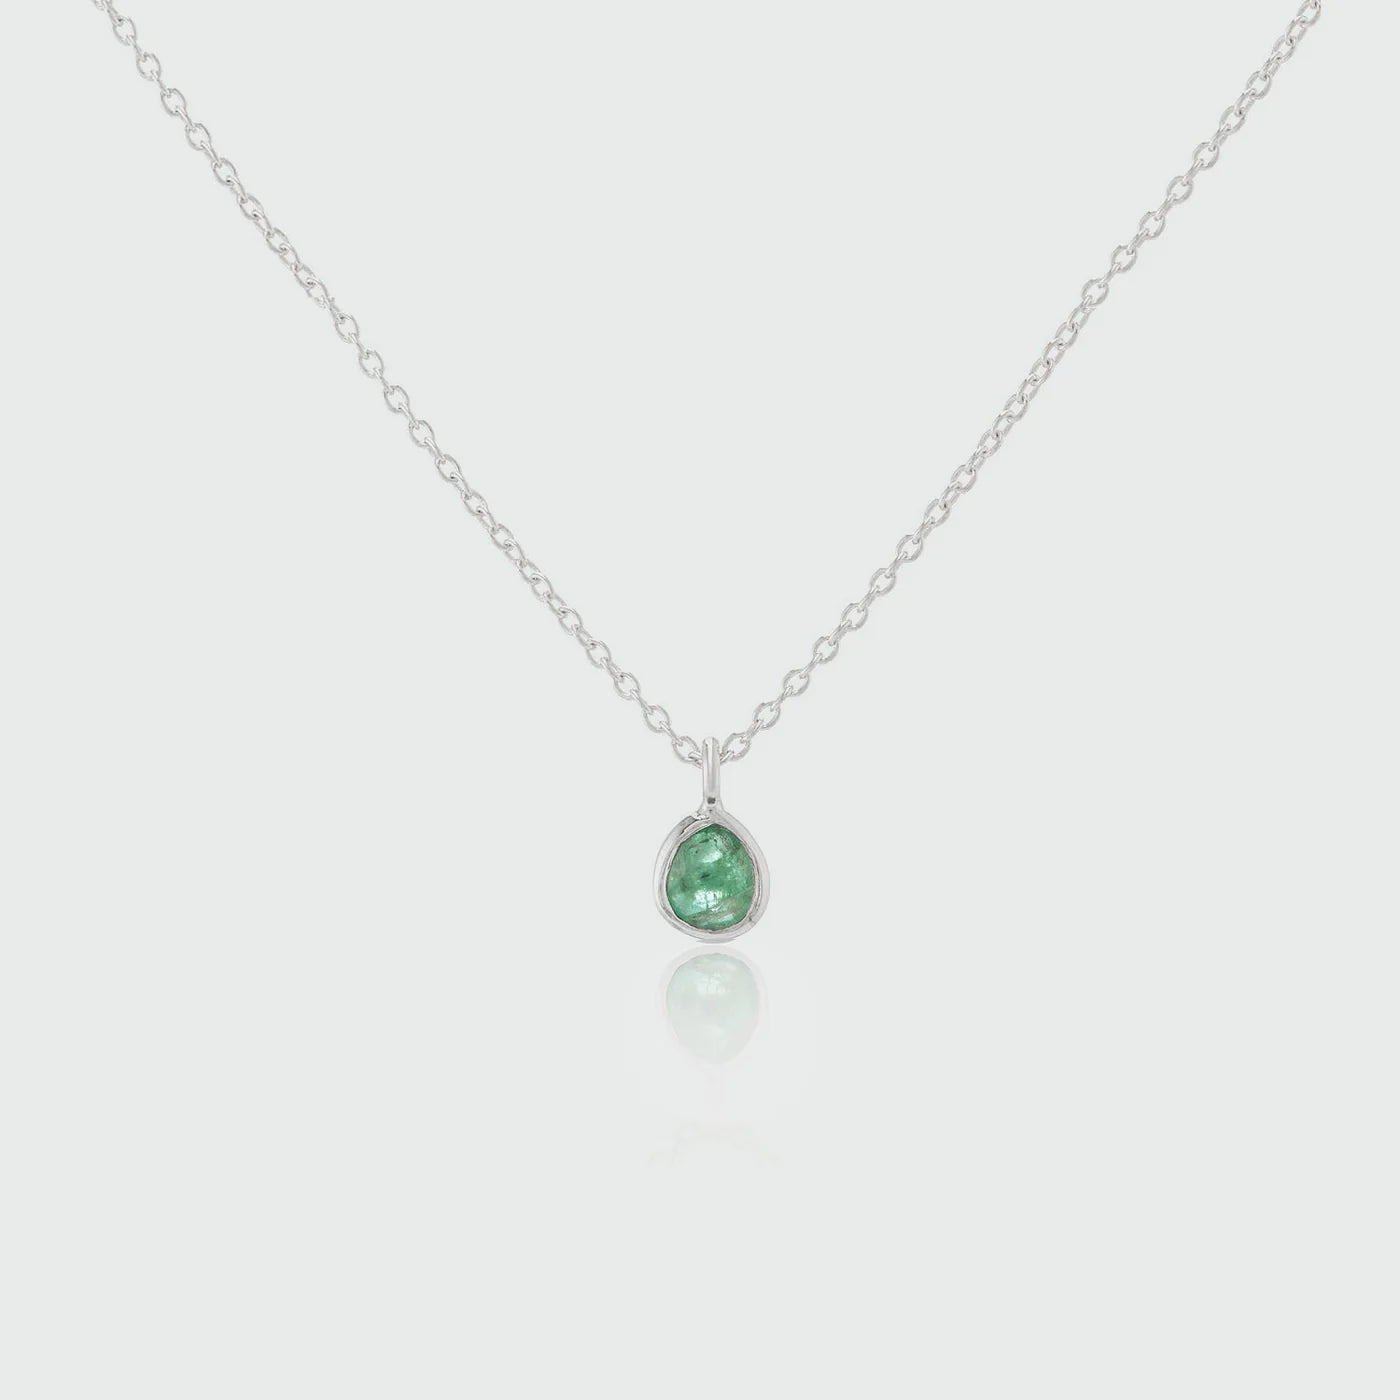 Delicate Emerald Pendant on Sterling Silver Chain